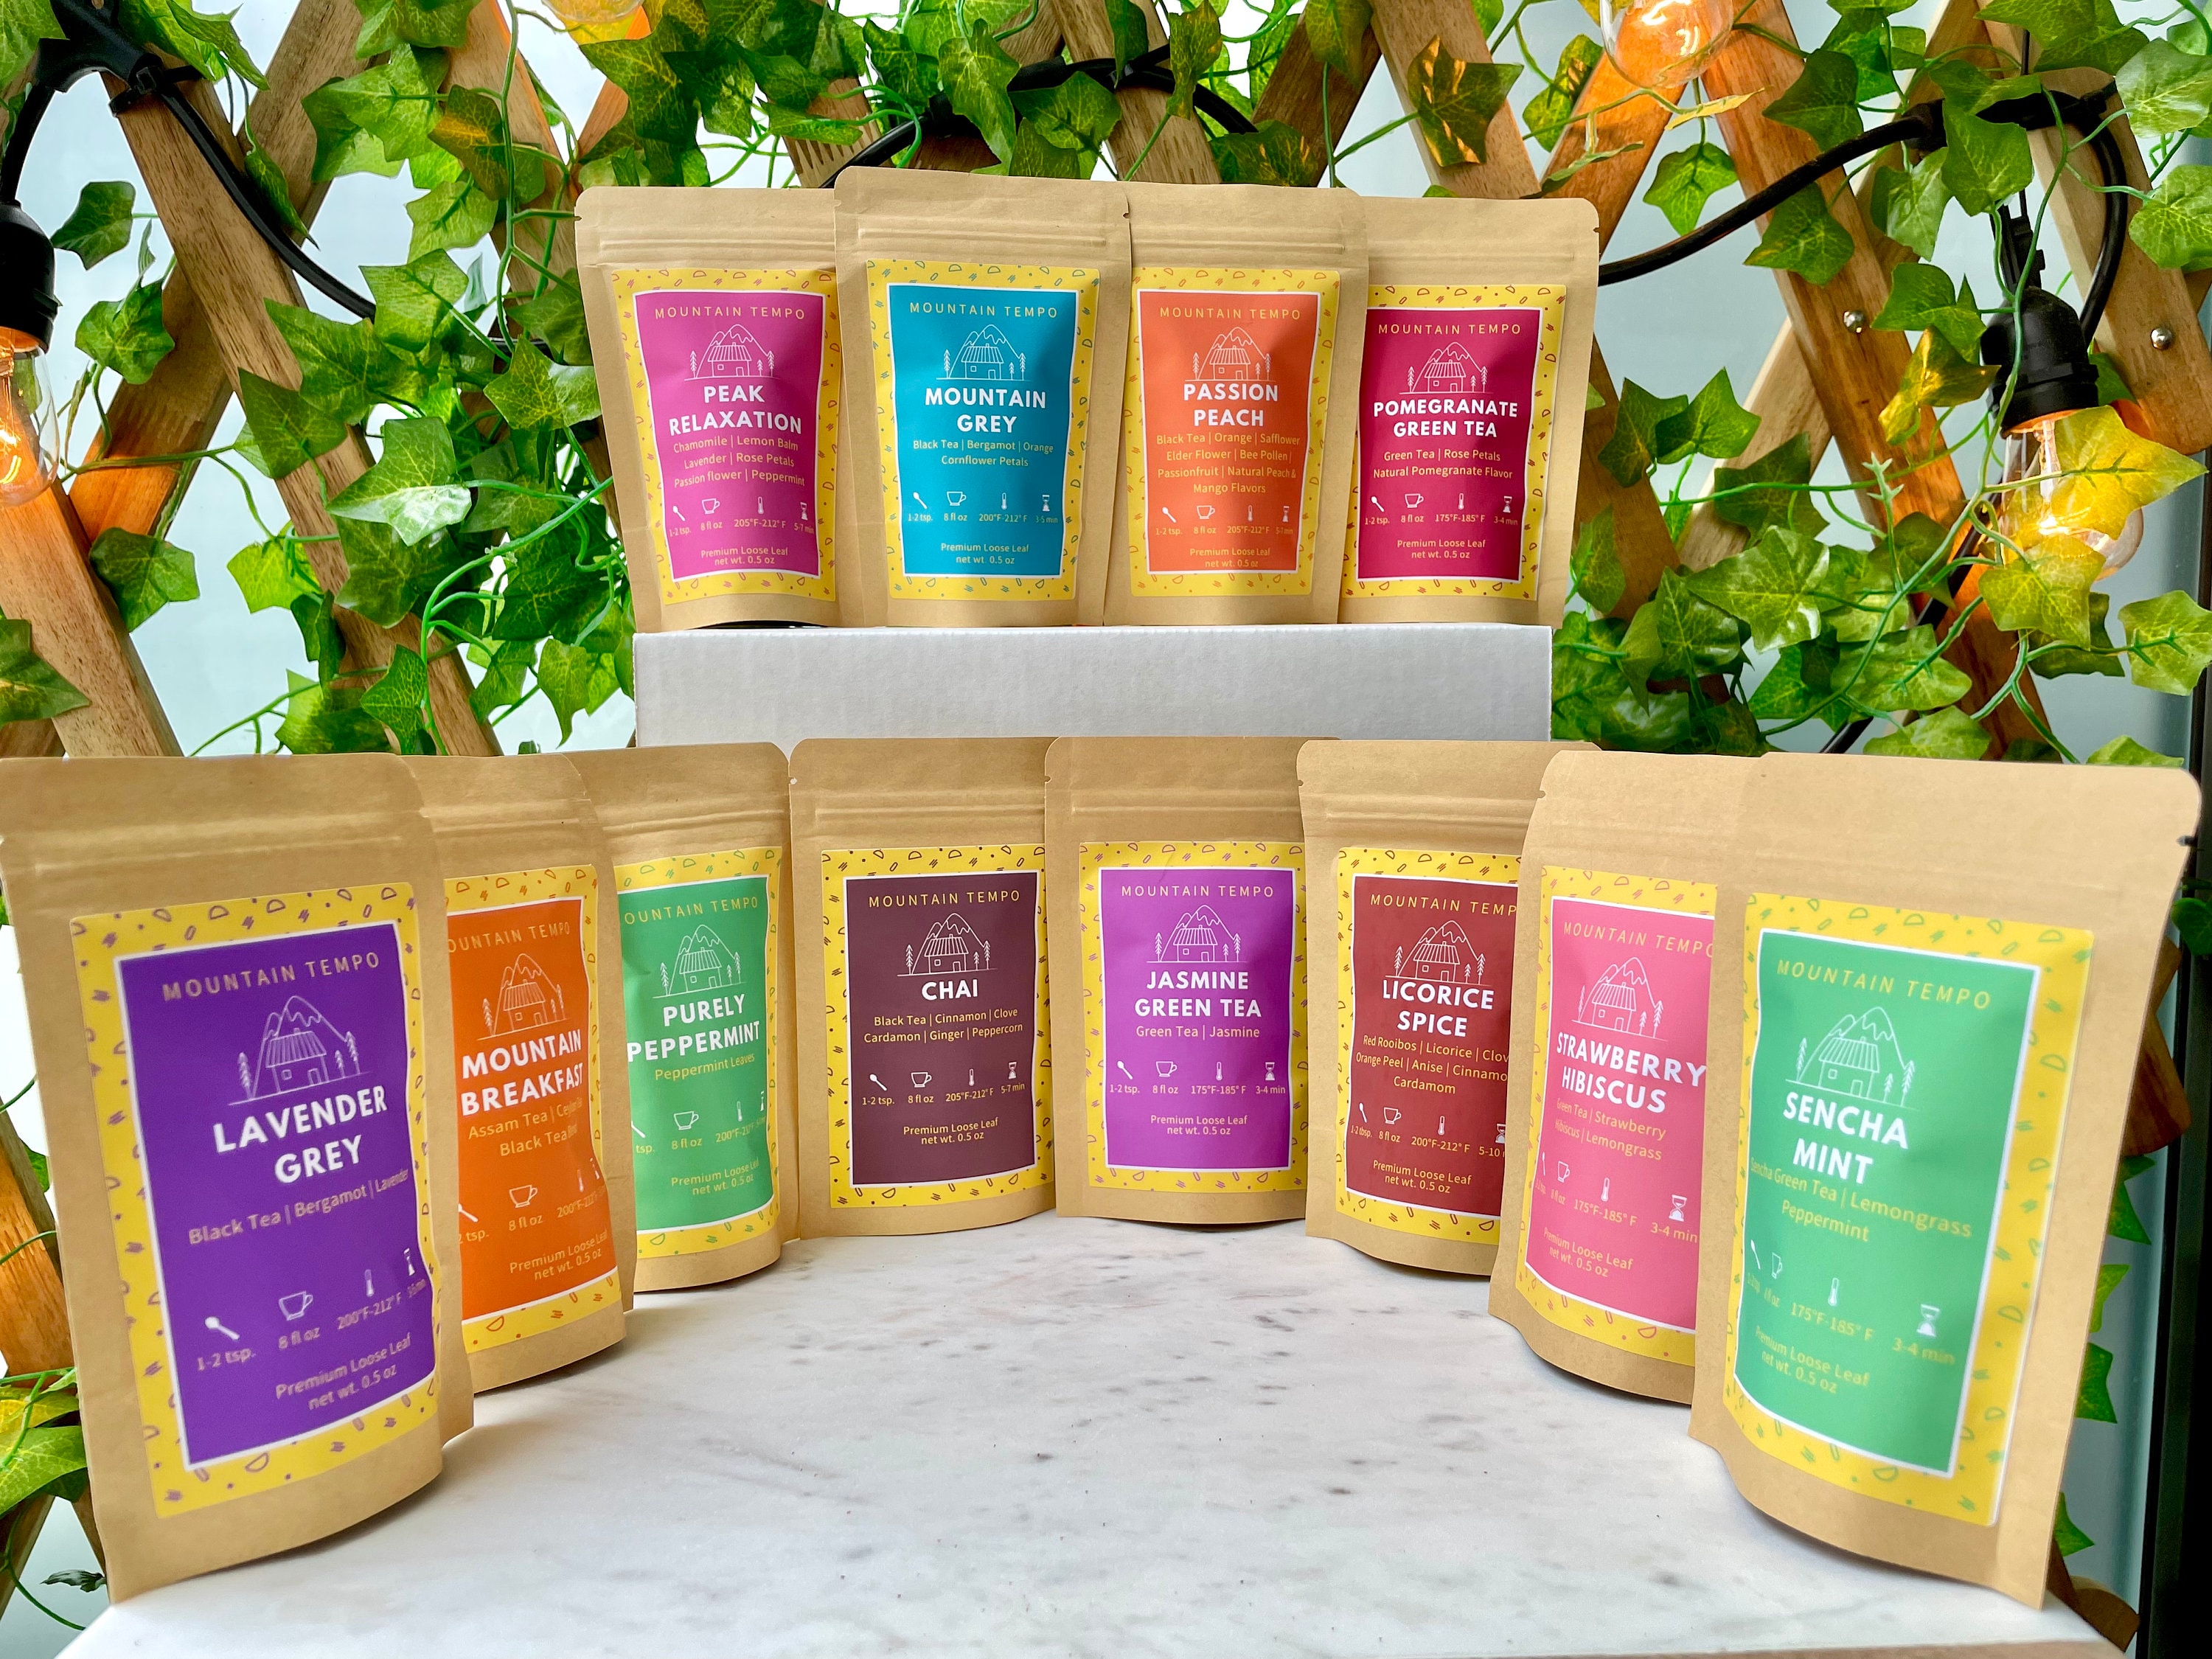 Brew La La Organic Green Tea - Chai Spice Flavor - 50 Tea Bag Tin - Low  Caffeine Gourmet Tea - USDA Certified Organic